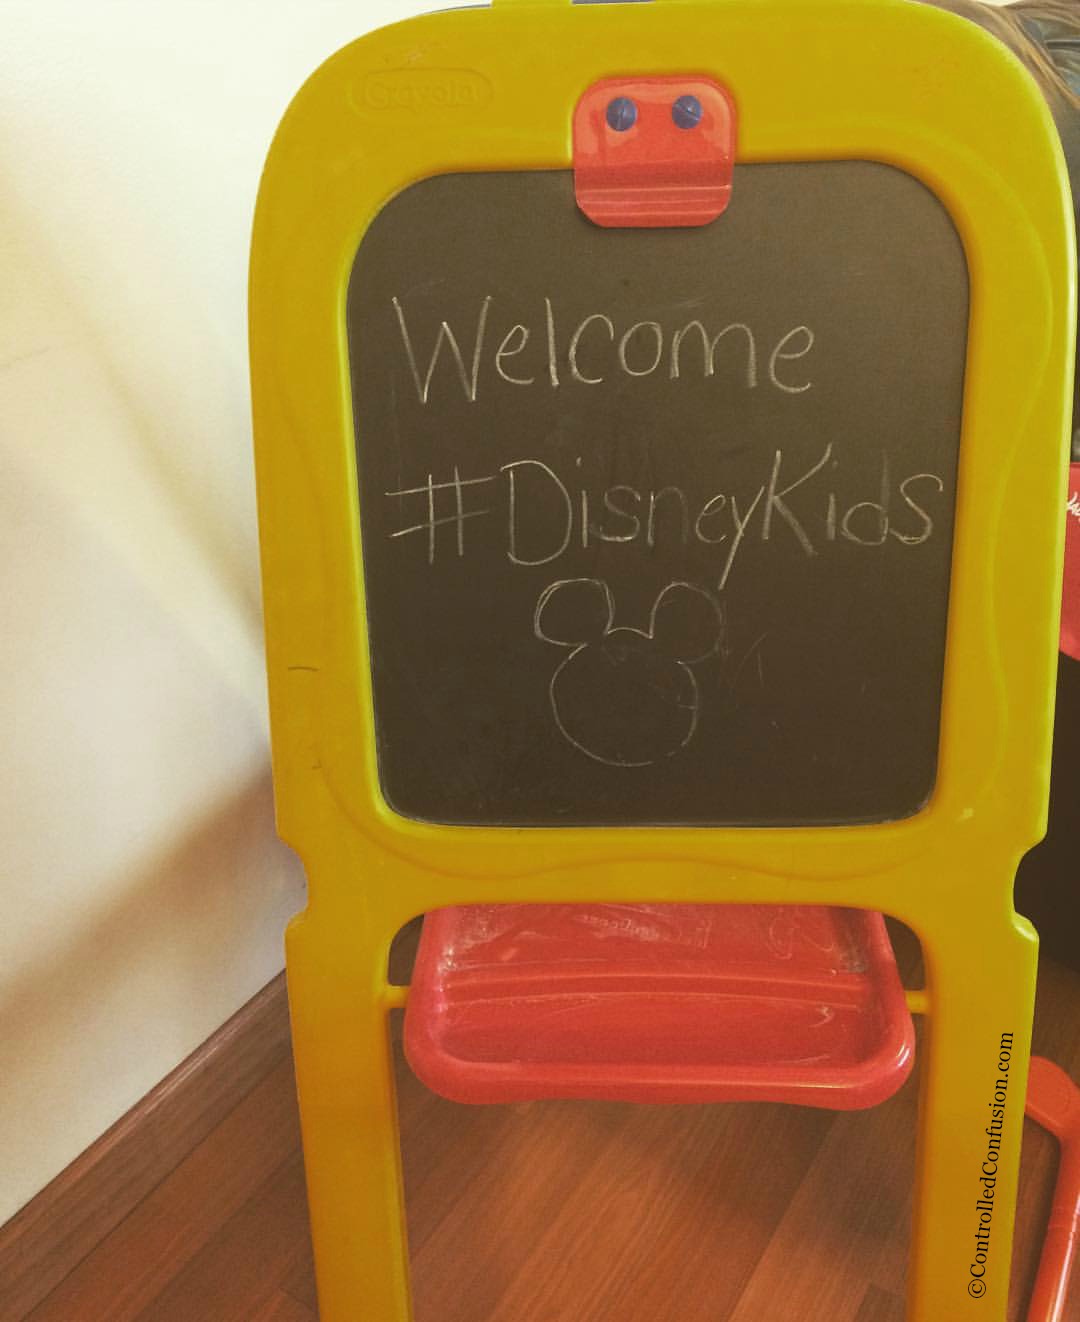 Our #DisneyKids Preschool Playdate Clubhouse Adventure